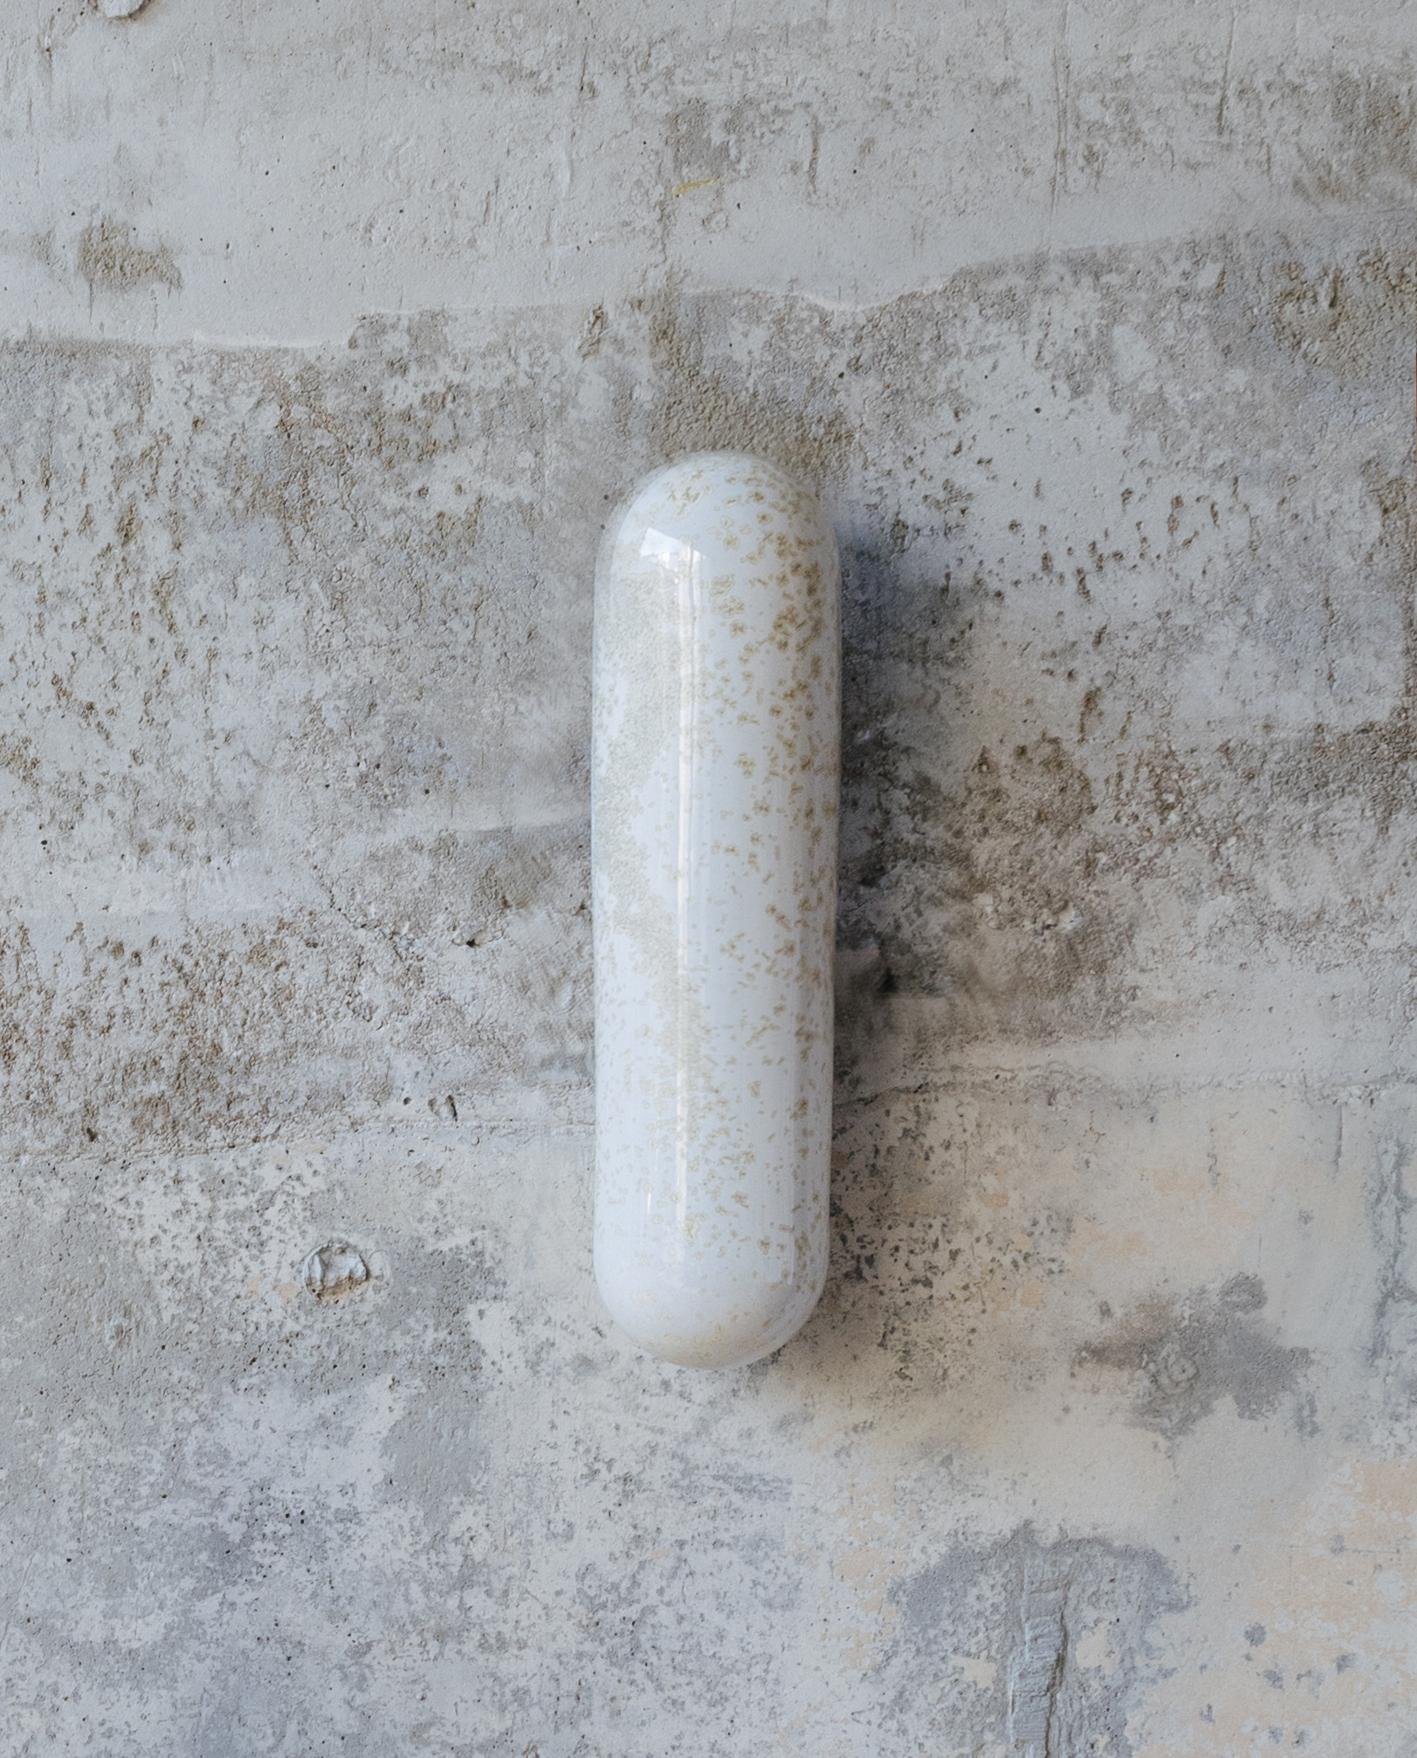 377 white pill